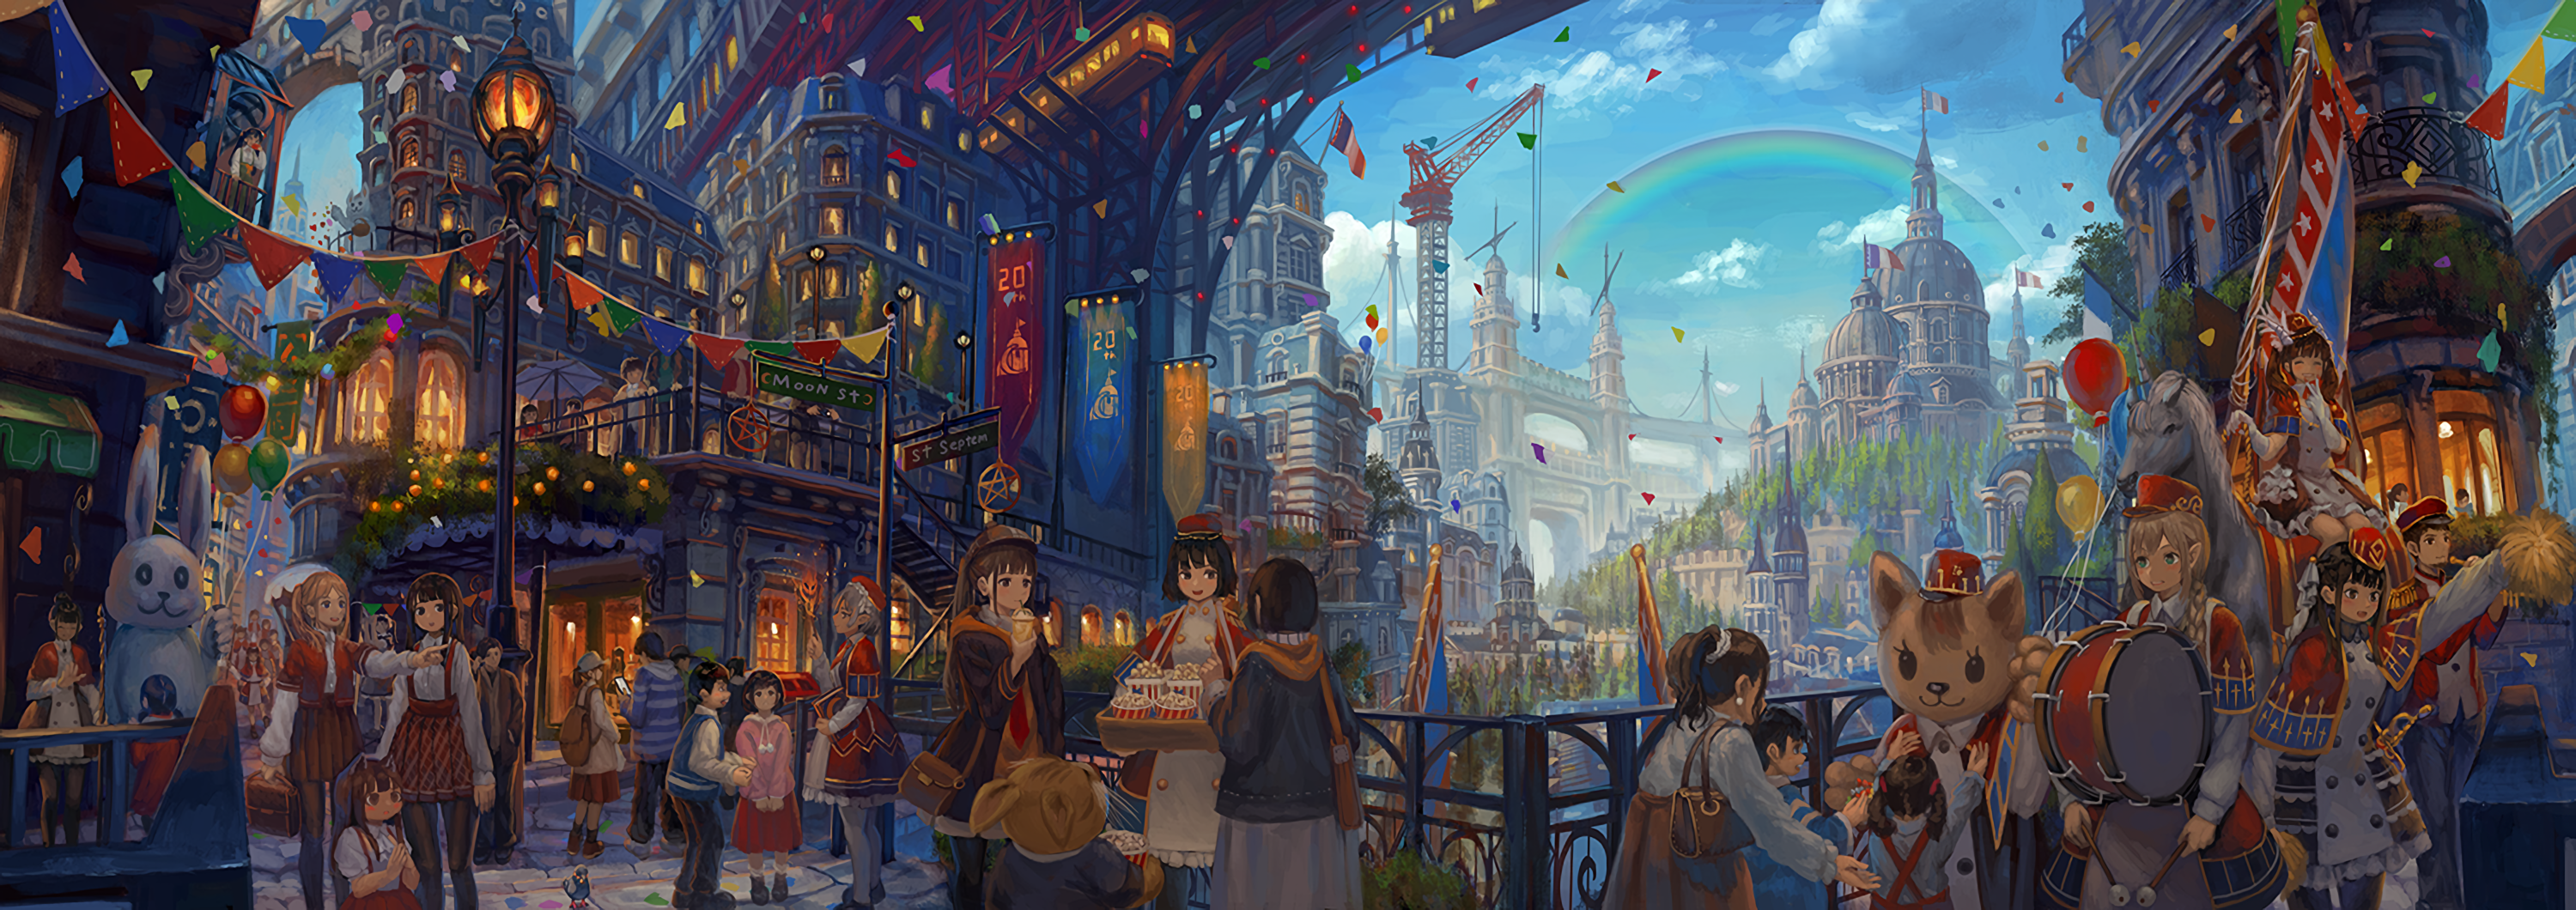 festivals, ultrawide, anime | 3000x1060 Wallpaper - wallhaven.cc